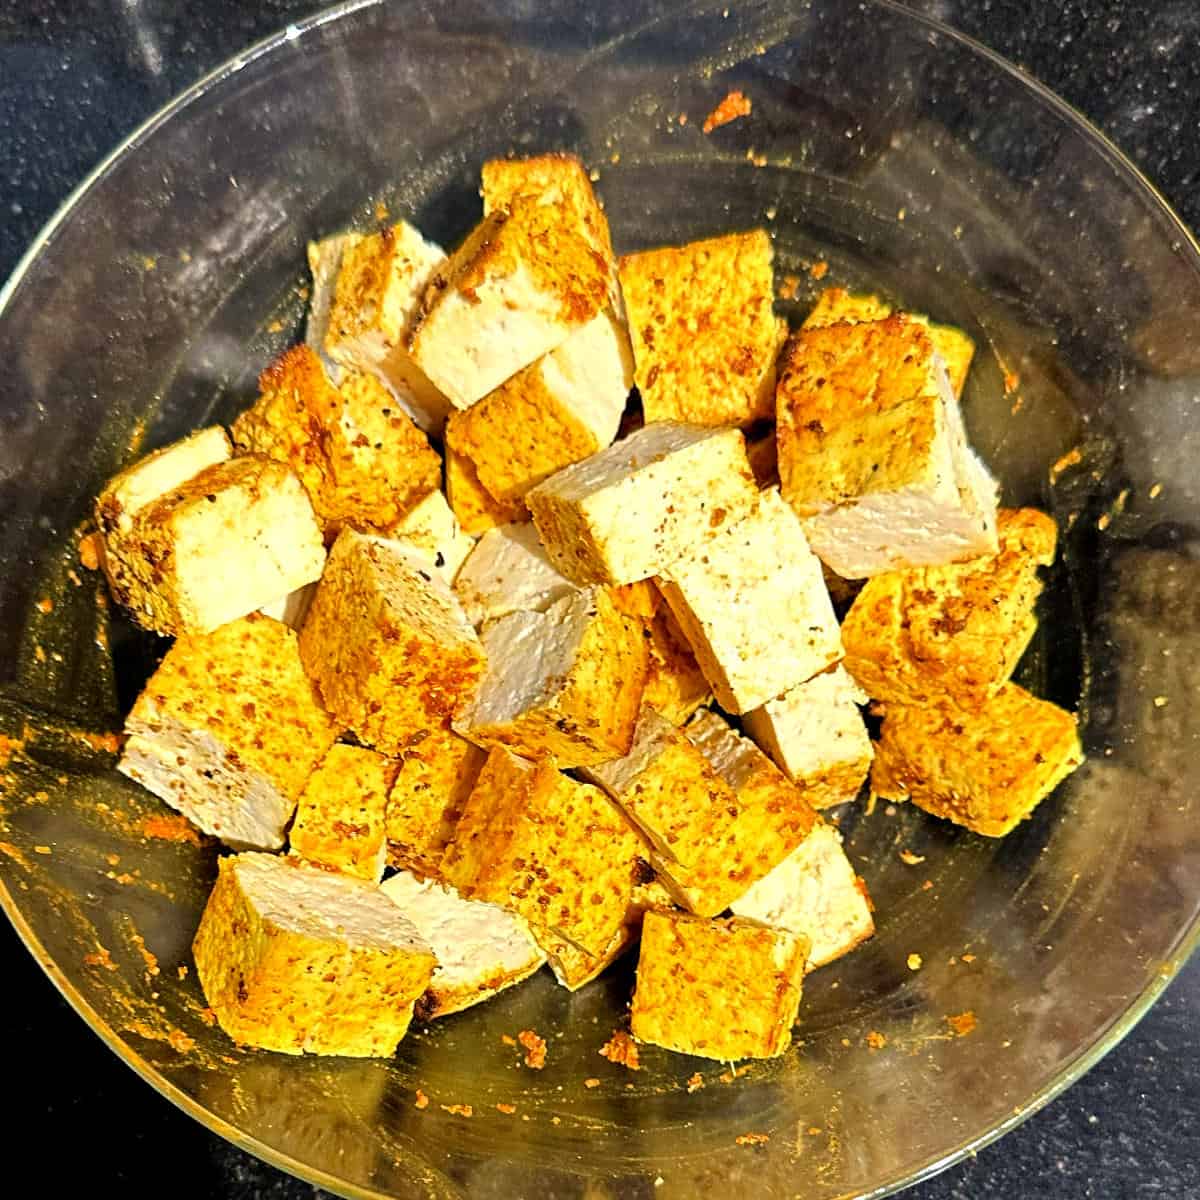 Cubed tofu in bowl.